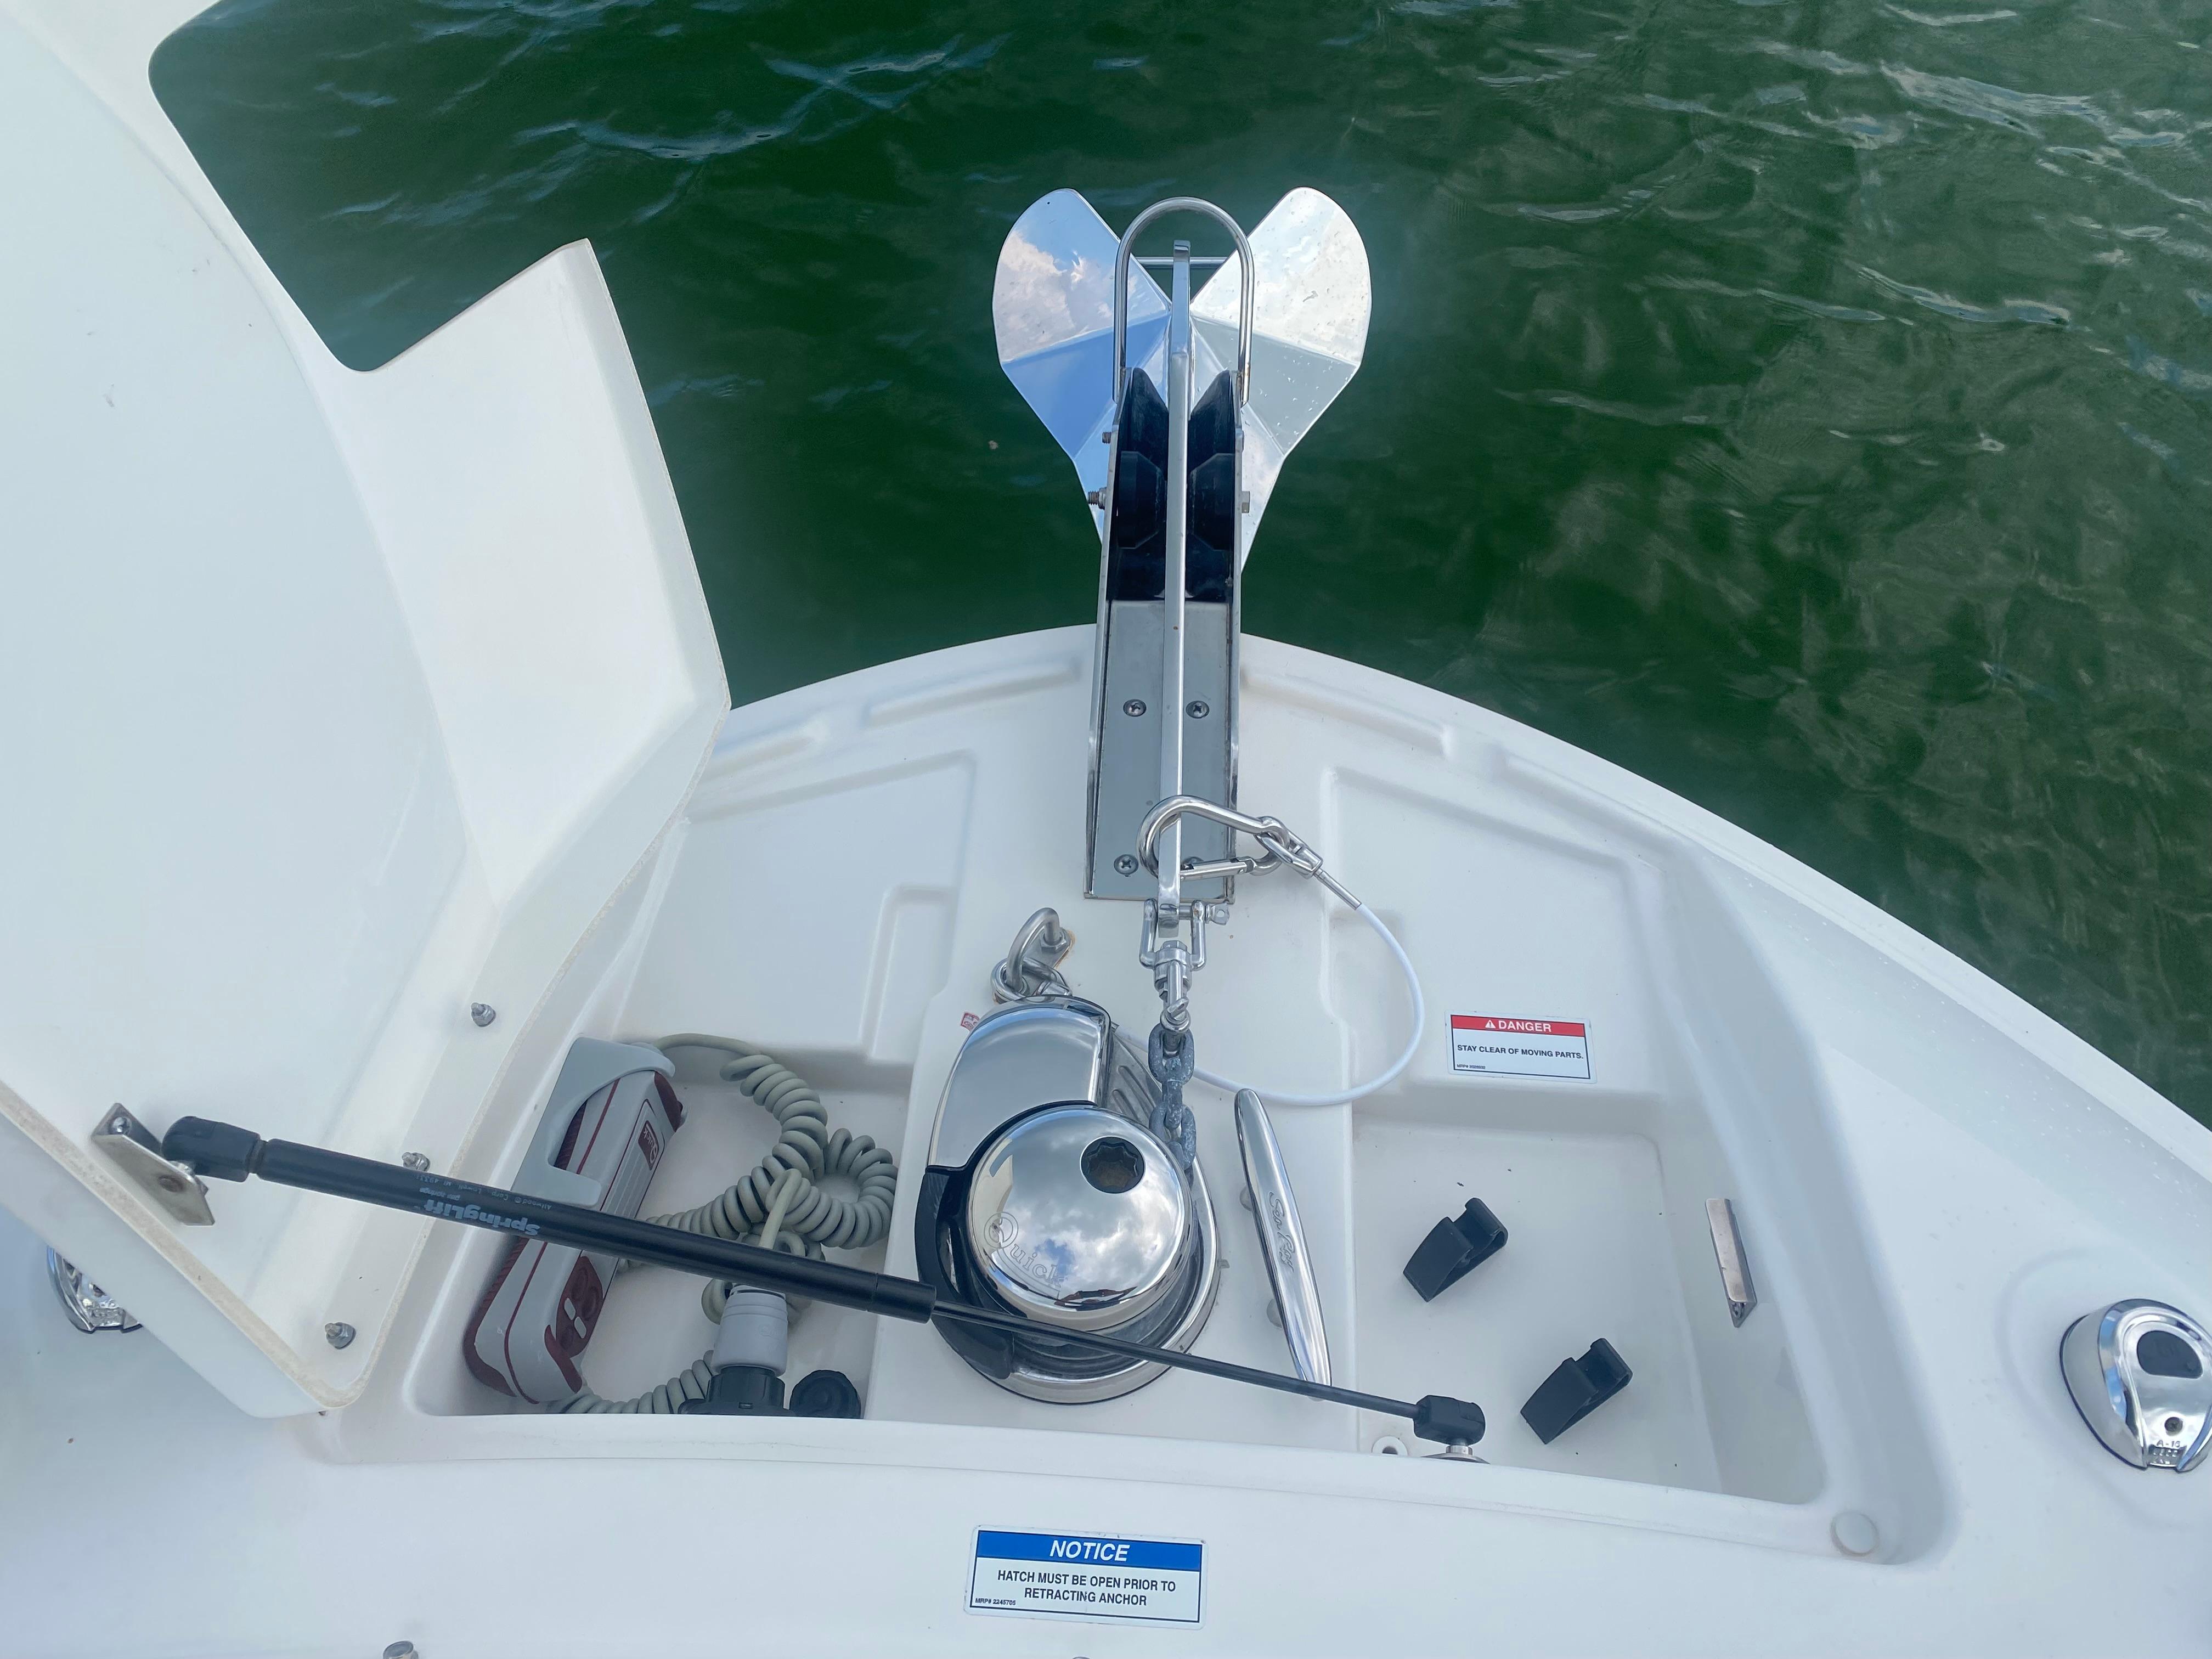 2022 Sea Ray SLX 310 Bowrider for sale - YachtWorld